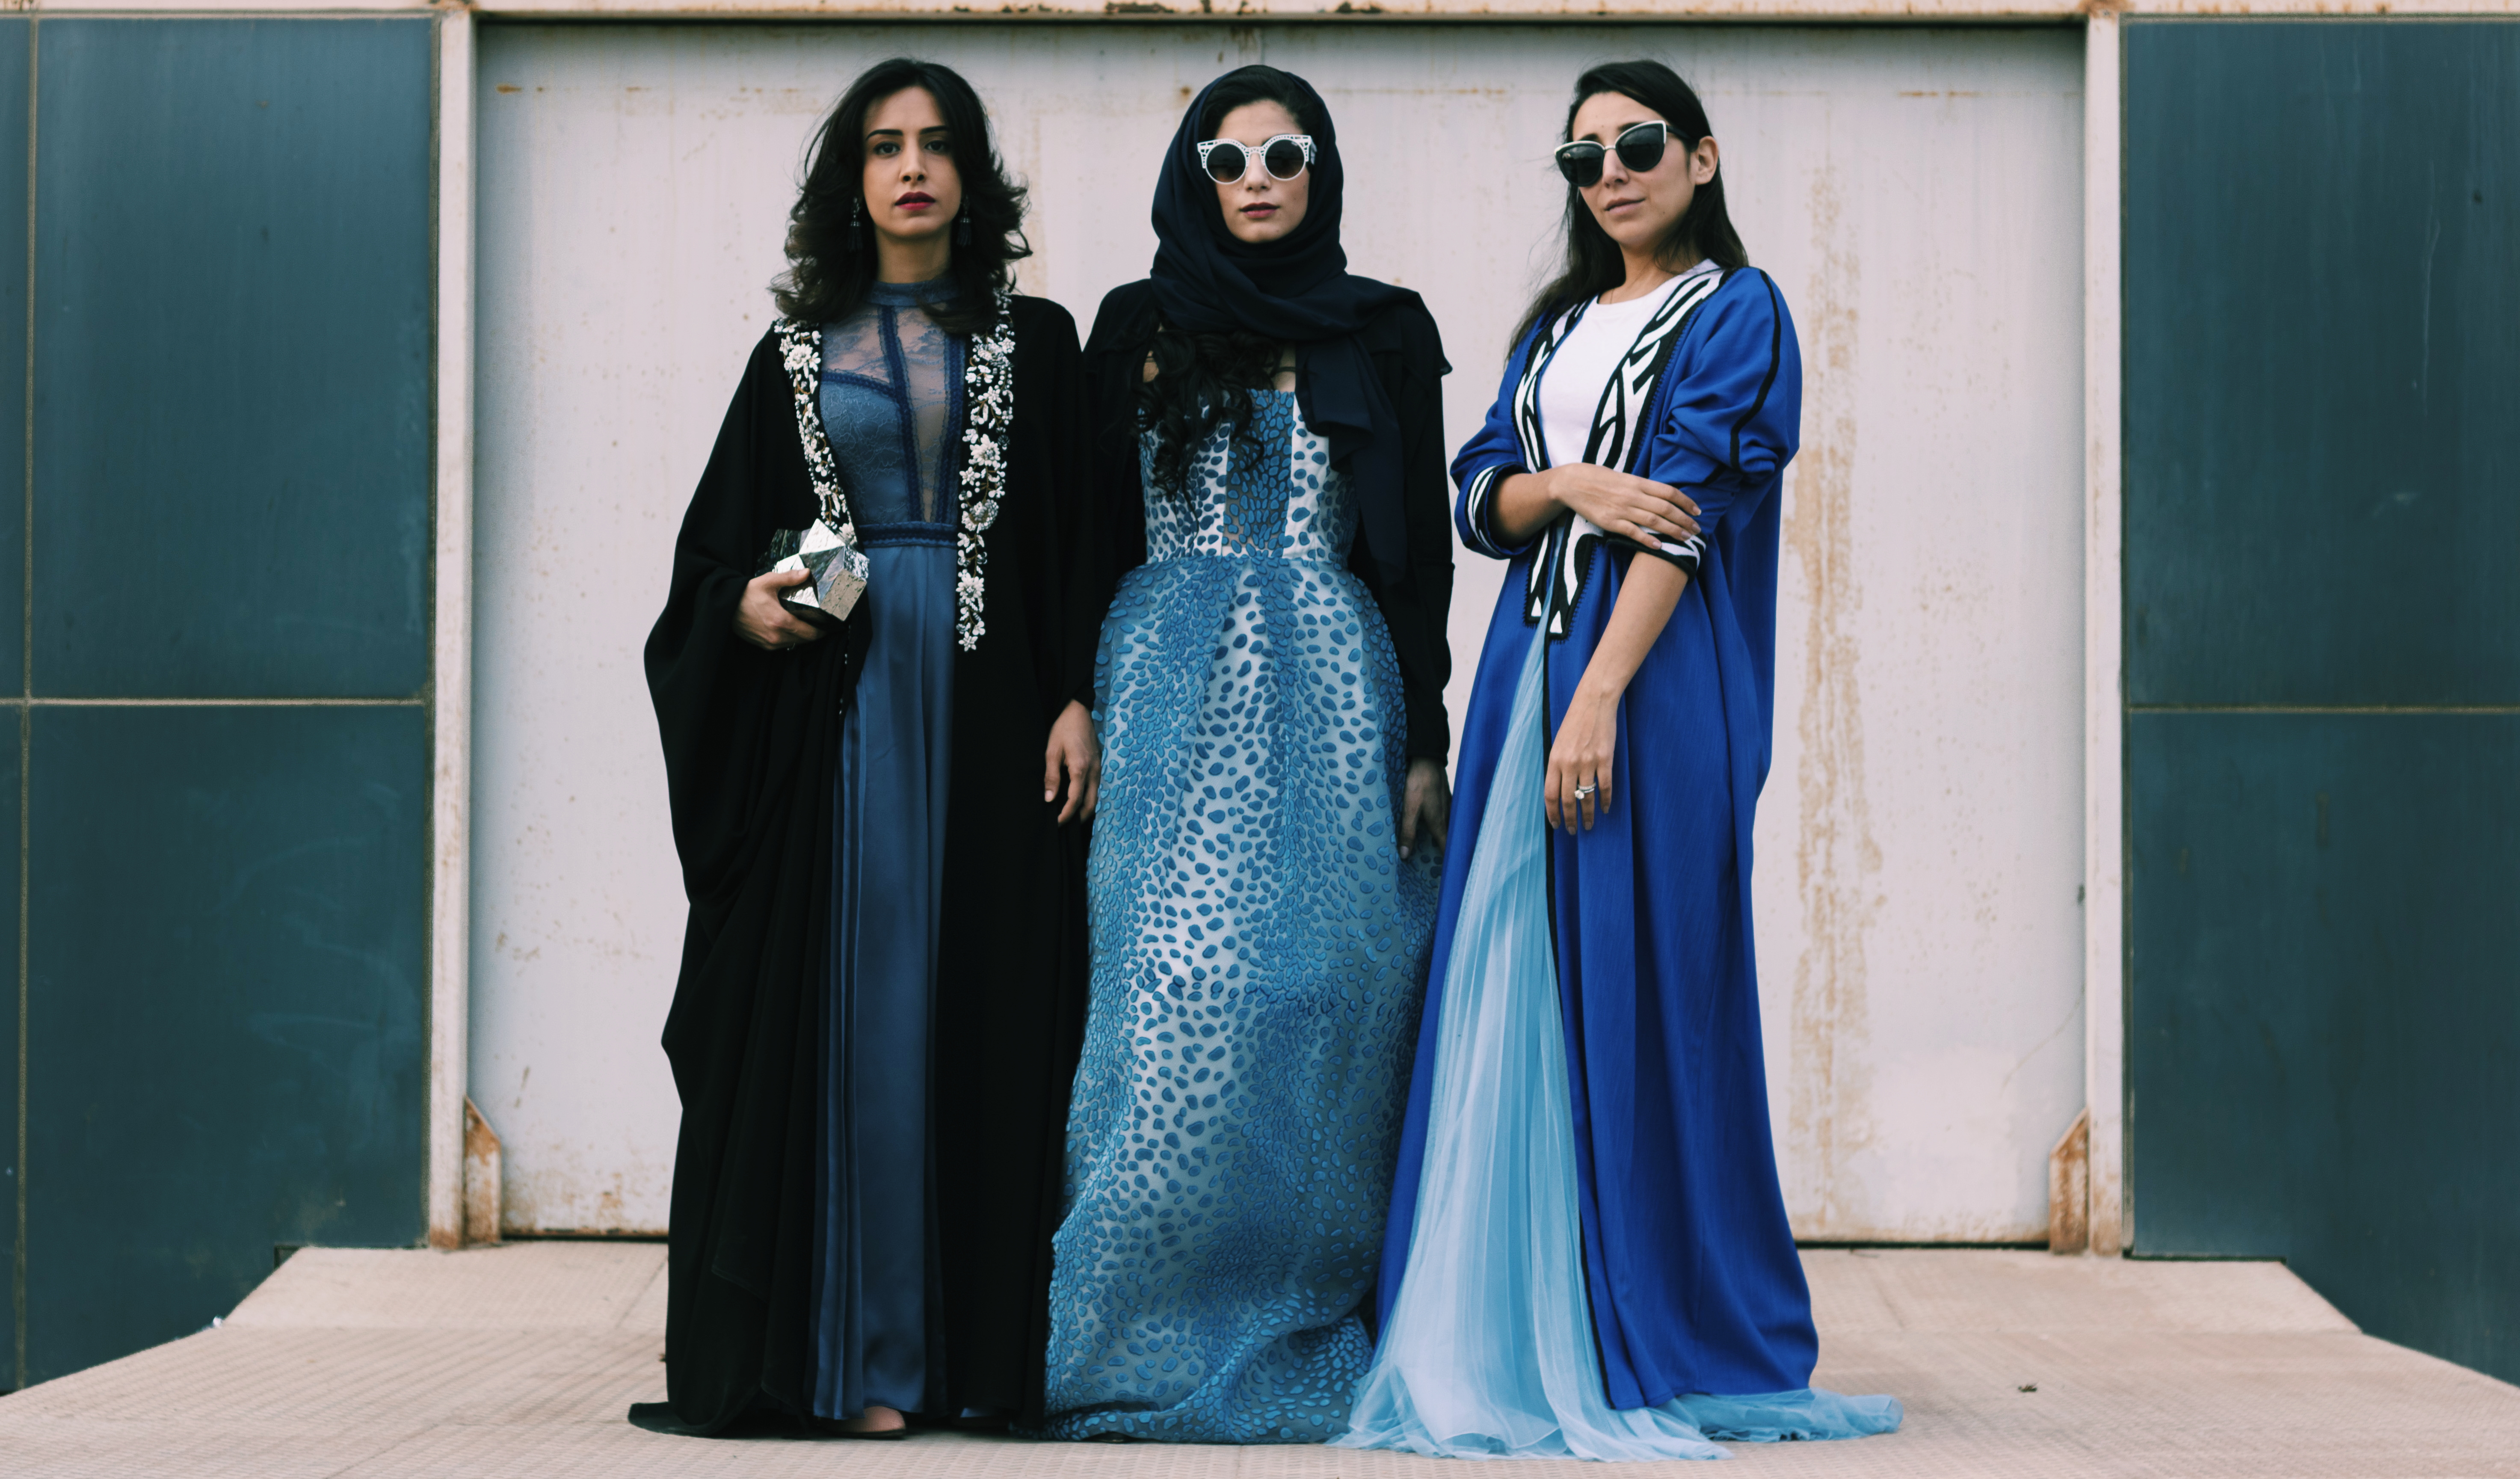 Saudi women have choice whether to wear abaya: crown prince - EgyptToday